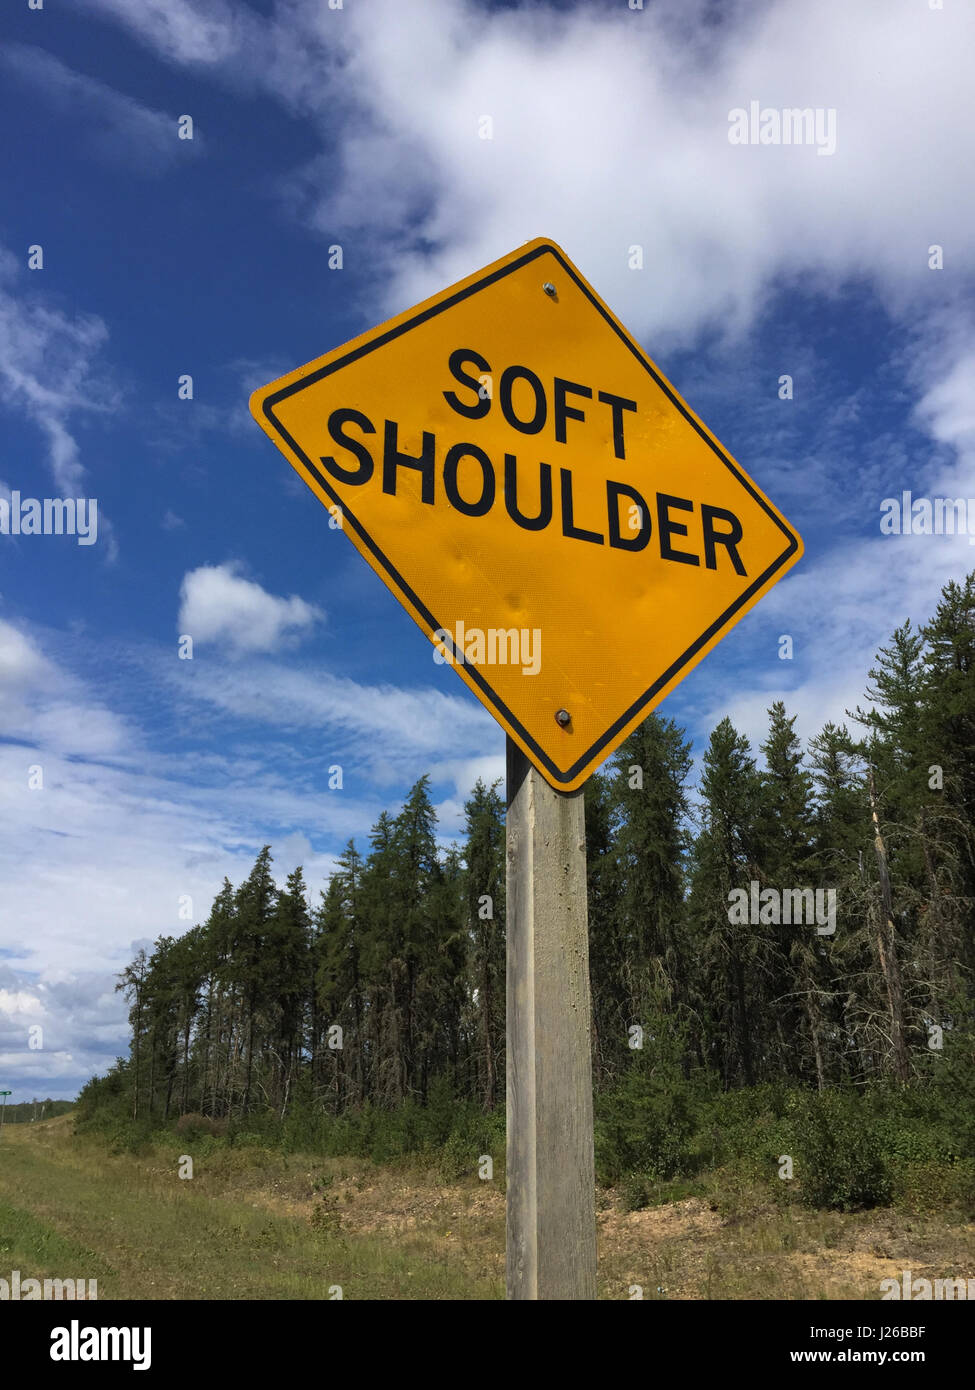 Soft Shoulder Sign on a Rural Road. Stock Photo